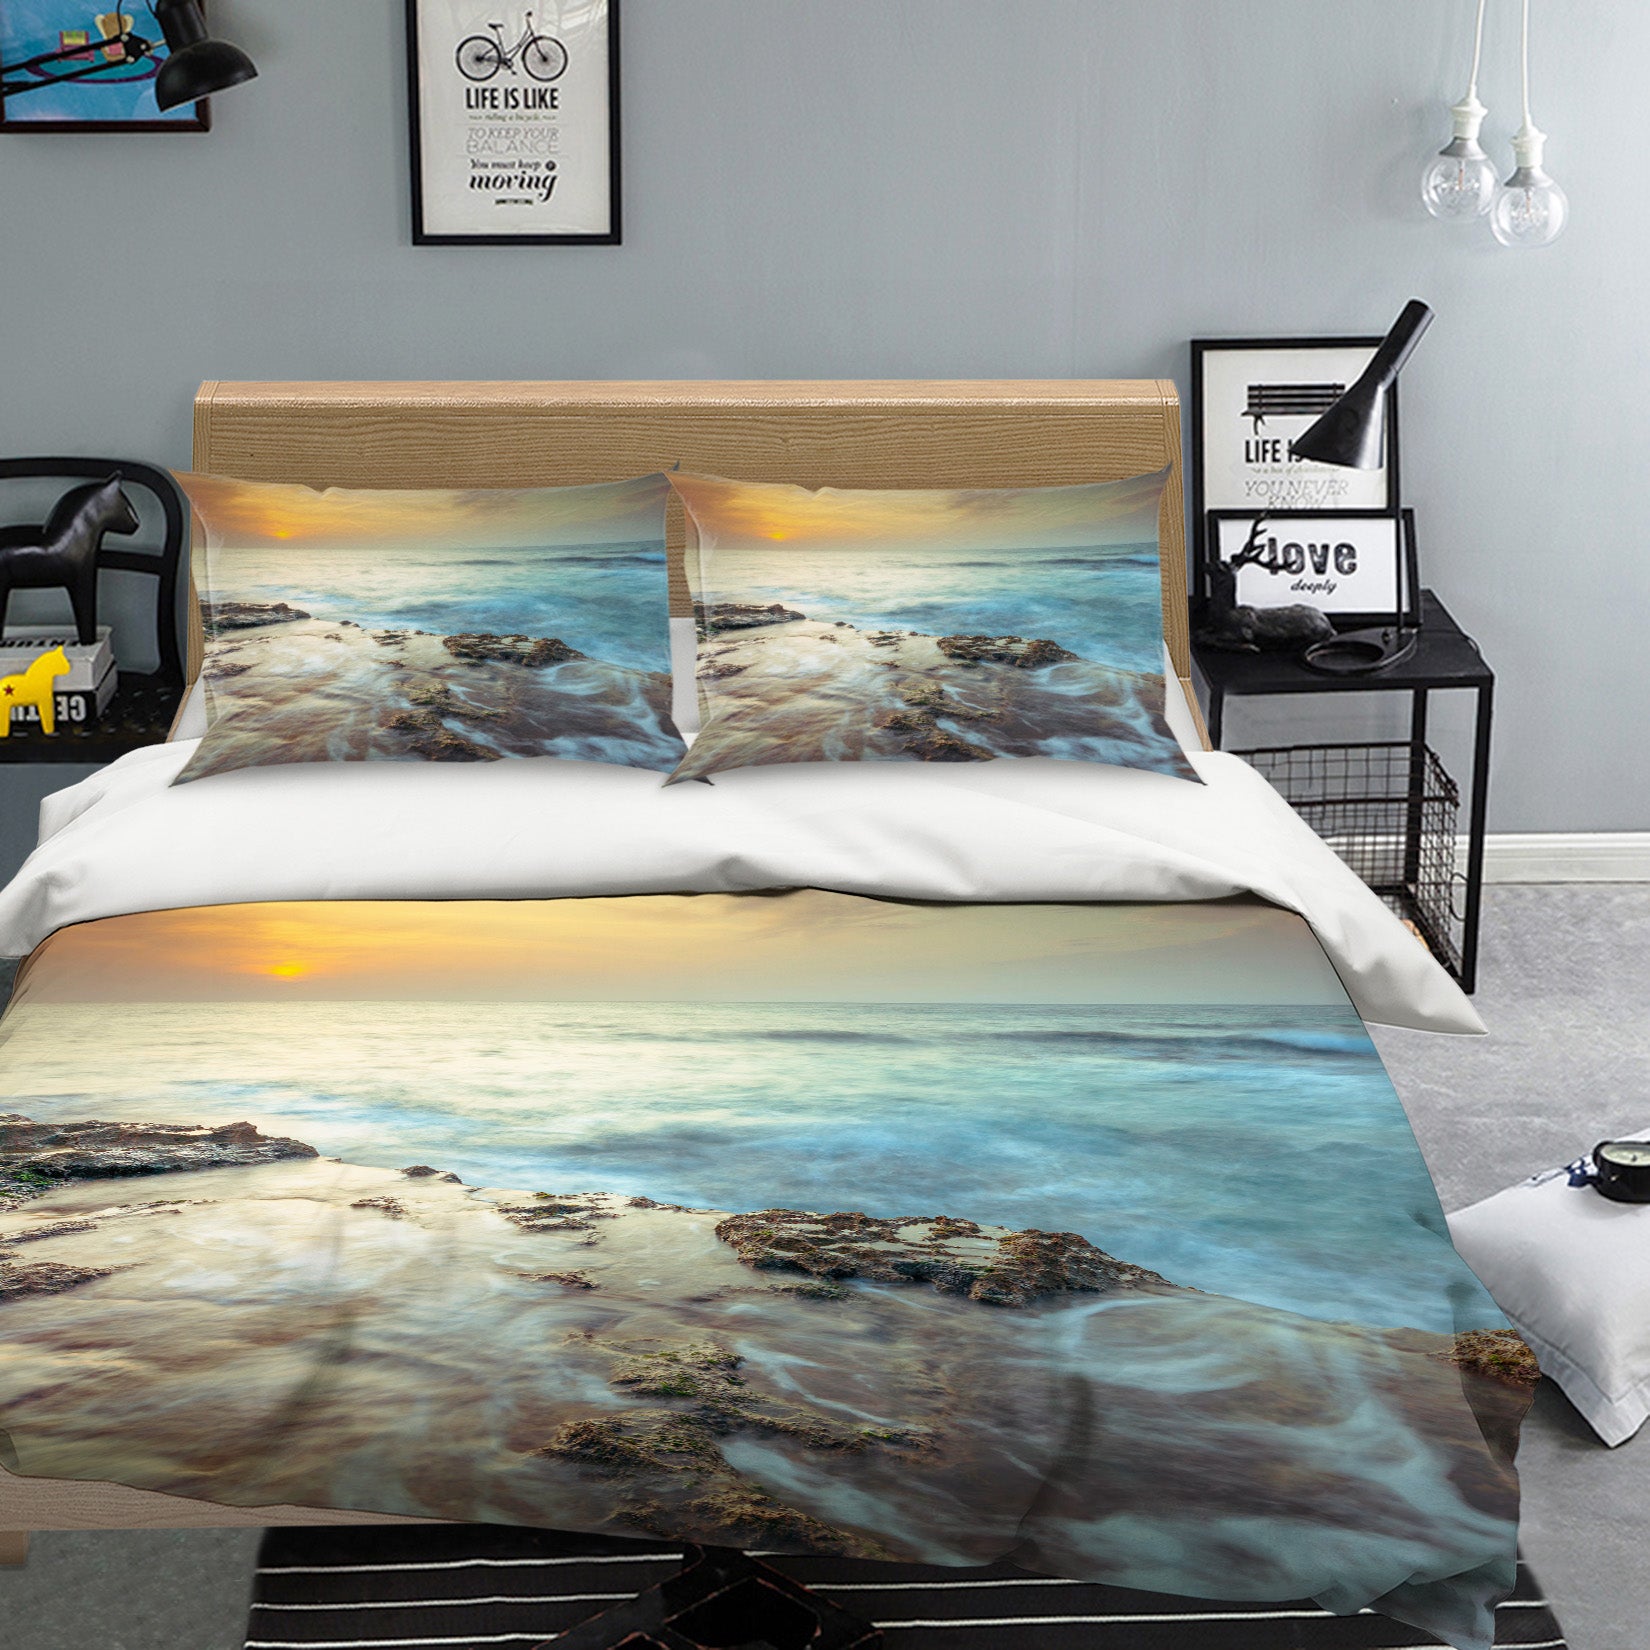 3D Seaside Stones 8583 Assaf Frank Bedding Bed Pillowcases Quilt